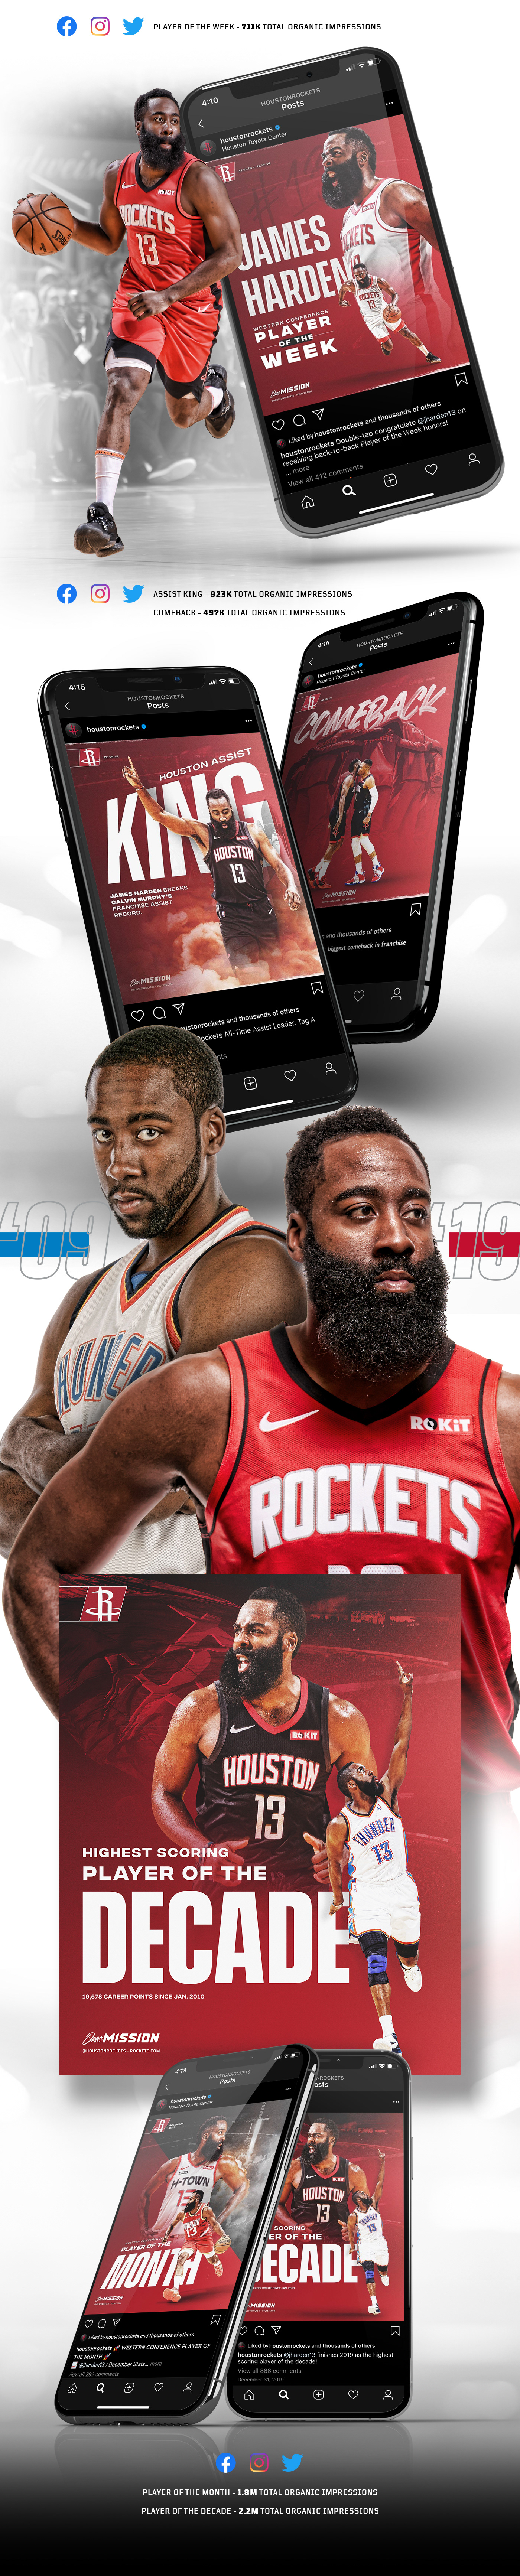 adidas basketball campaigns digital Houston Rockets James Harden jumpman NBA Russell Westbrook